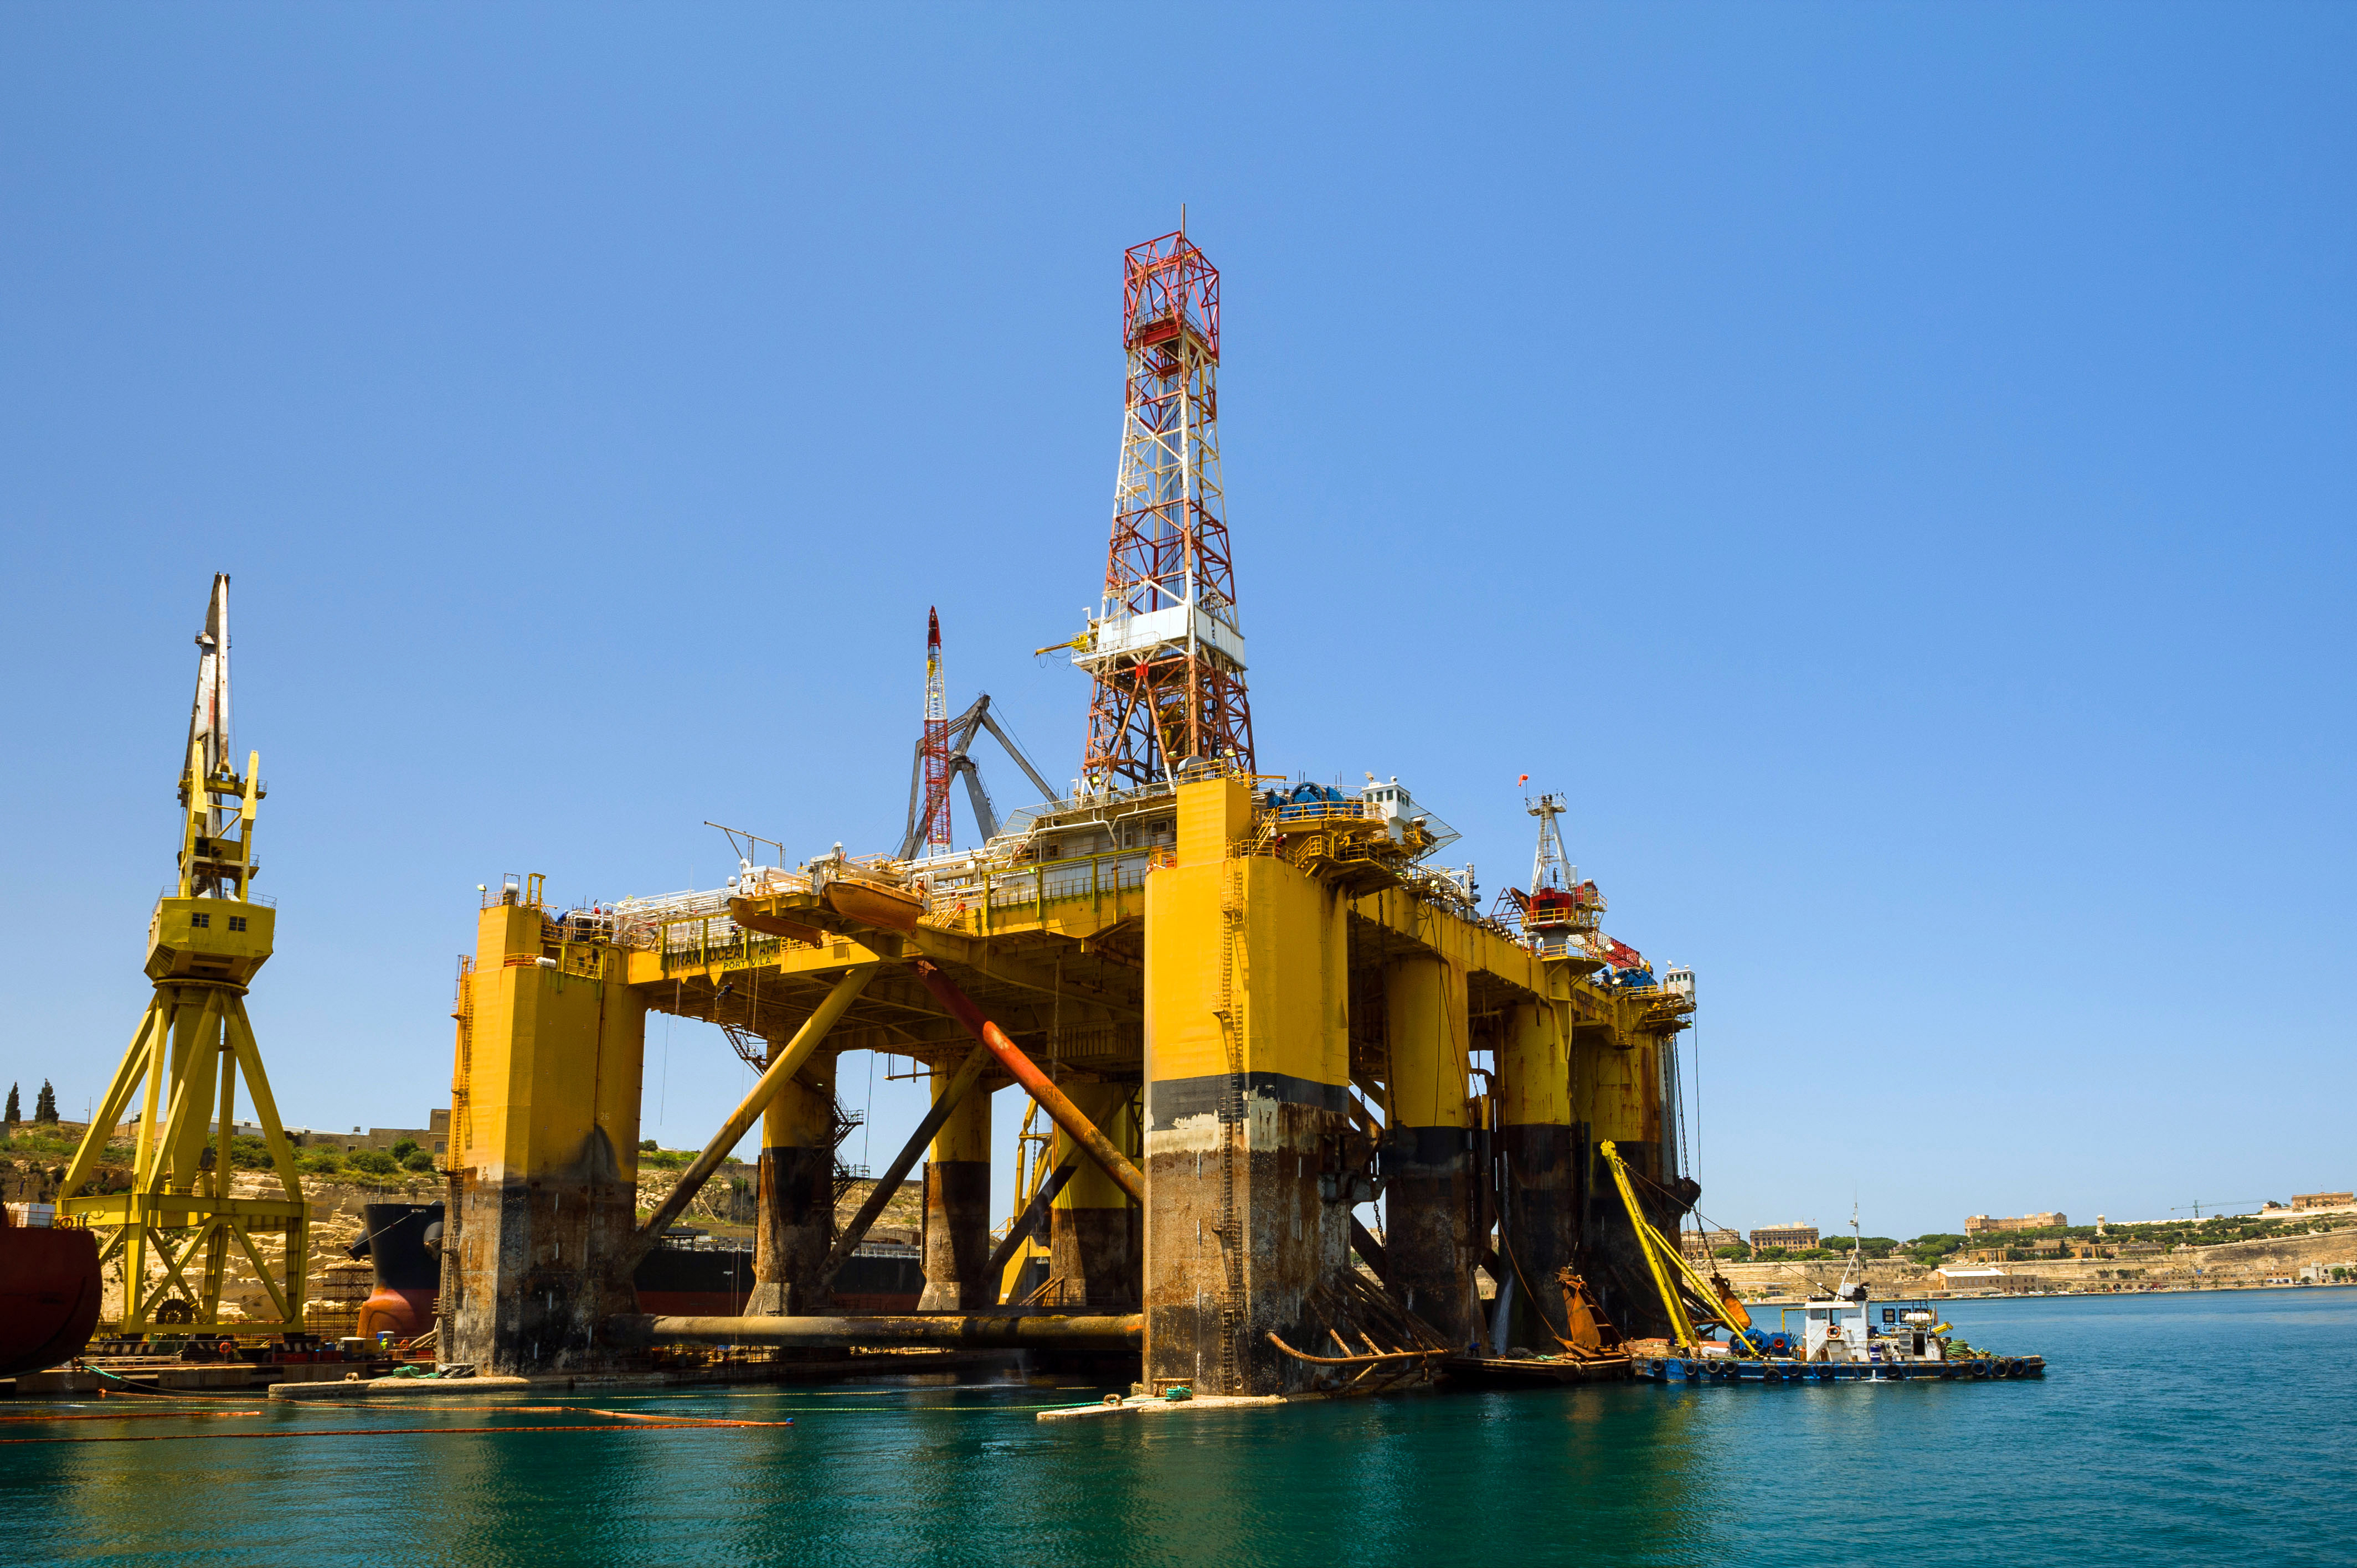 Transocean Drilling Rig, undergoing maintenance in the harbour of Valletta, Malta.